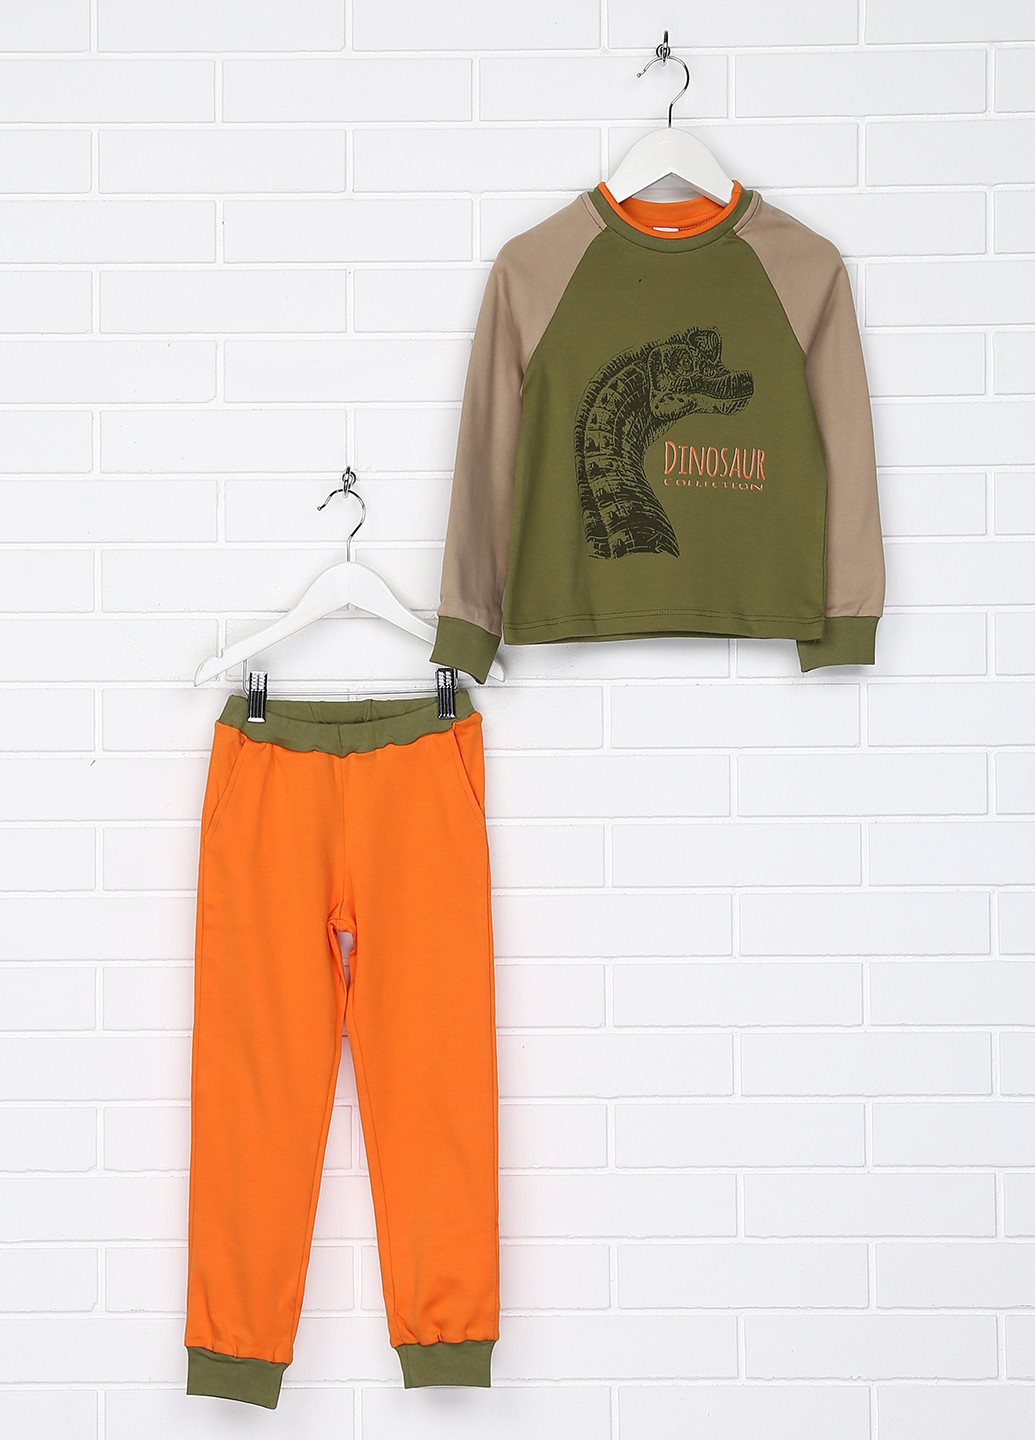 Оливково-зеленая всесезон пижама (реглан, брюки) Роза